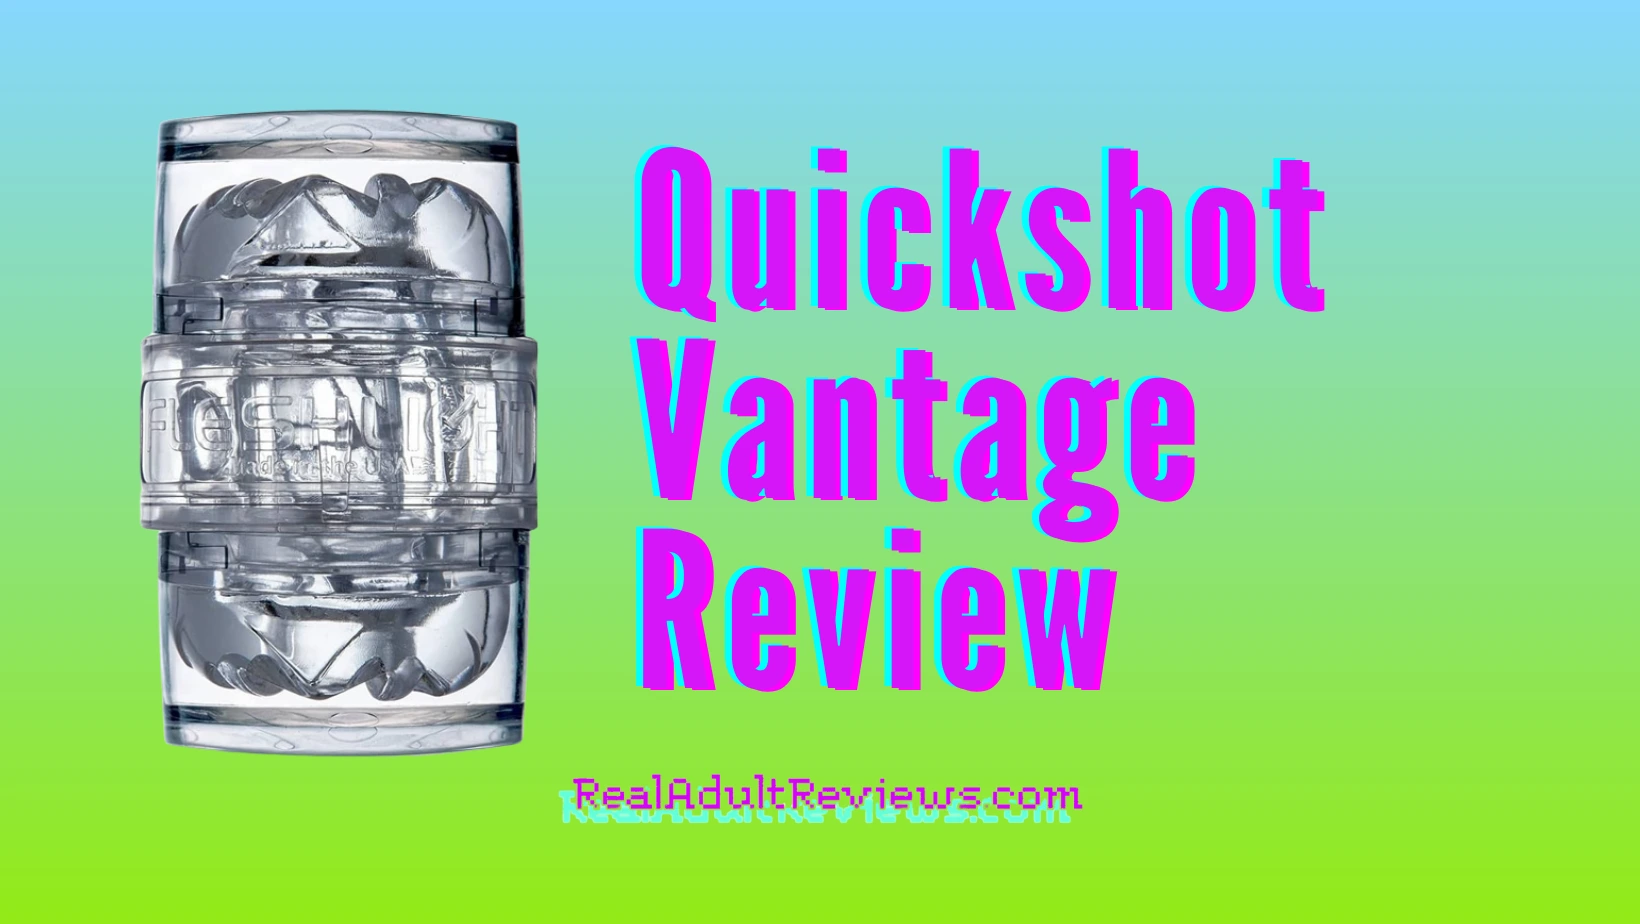 Quickshot Vantage Masturbator By Fleshlight Review: What is the best way to spend $35?